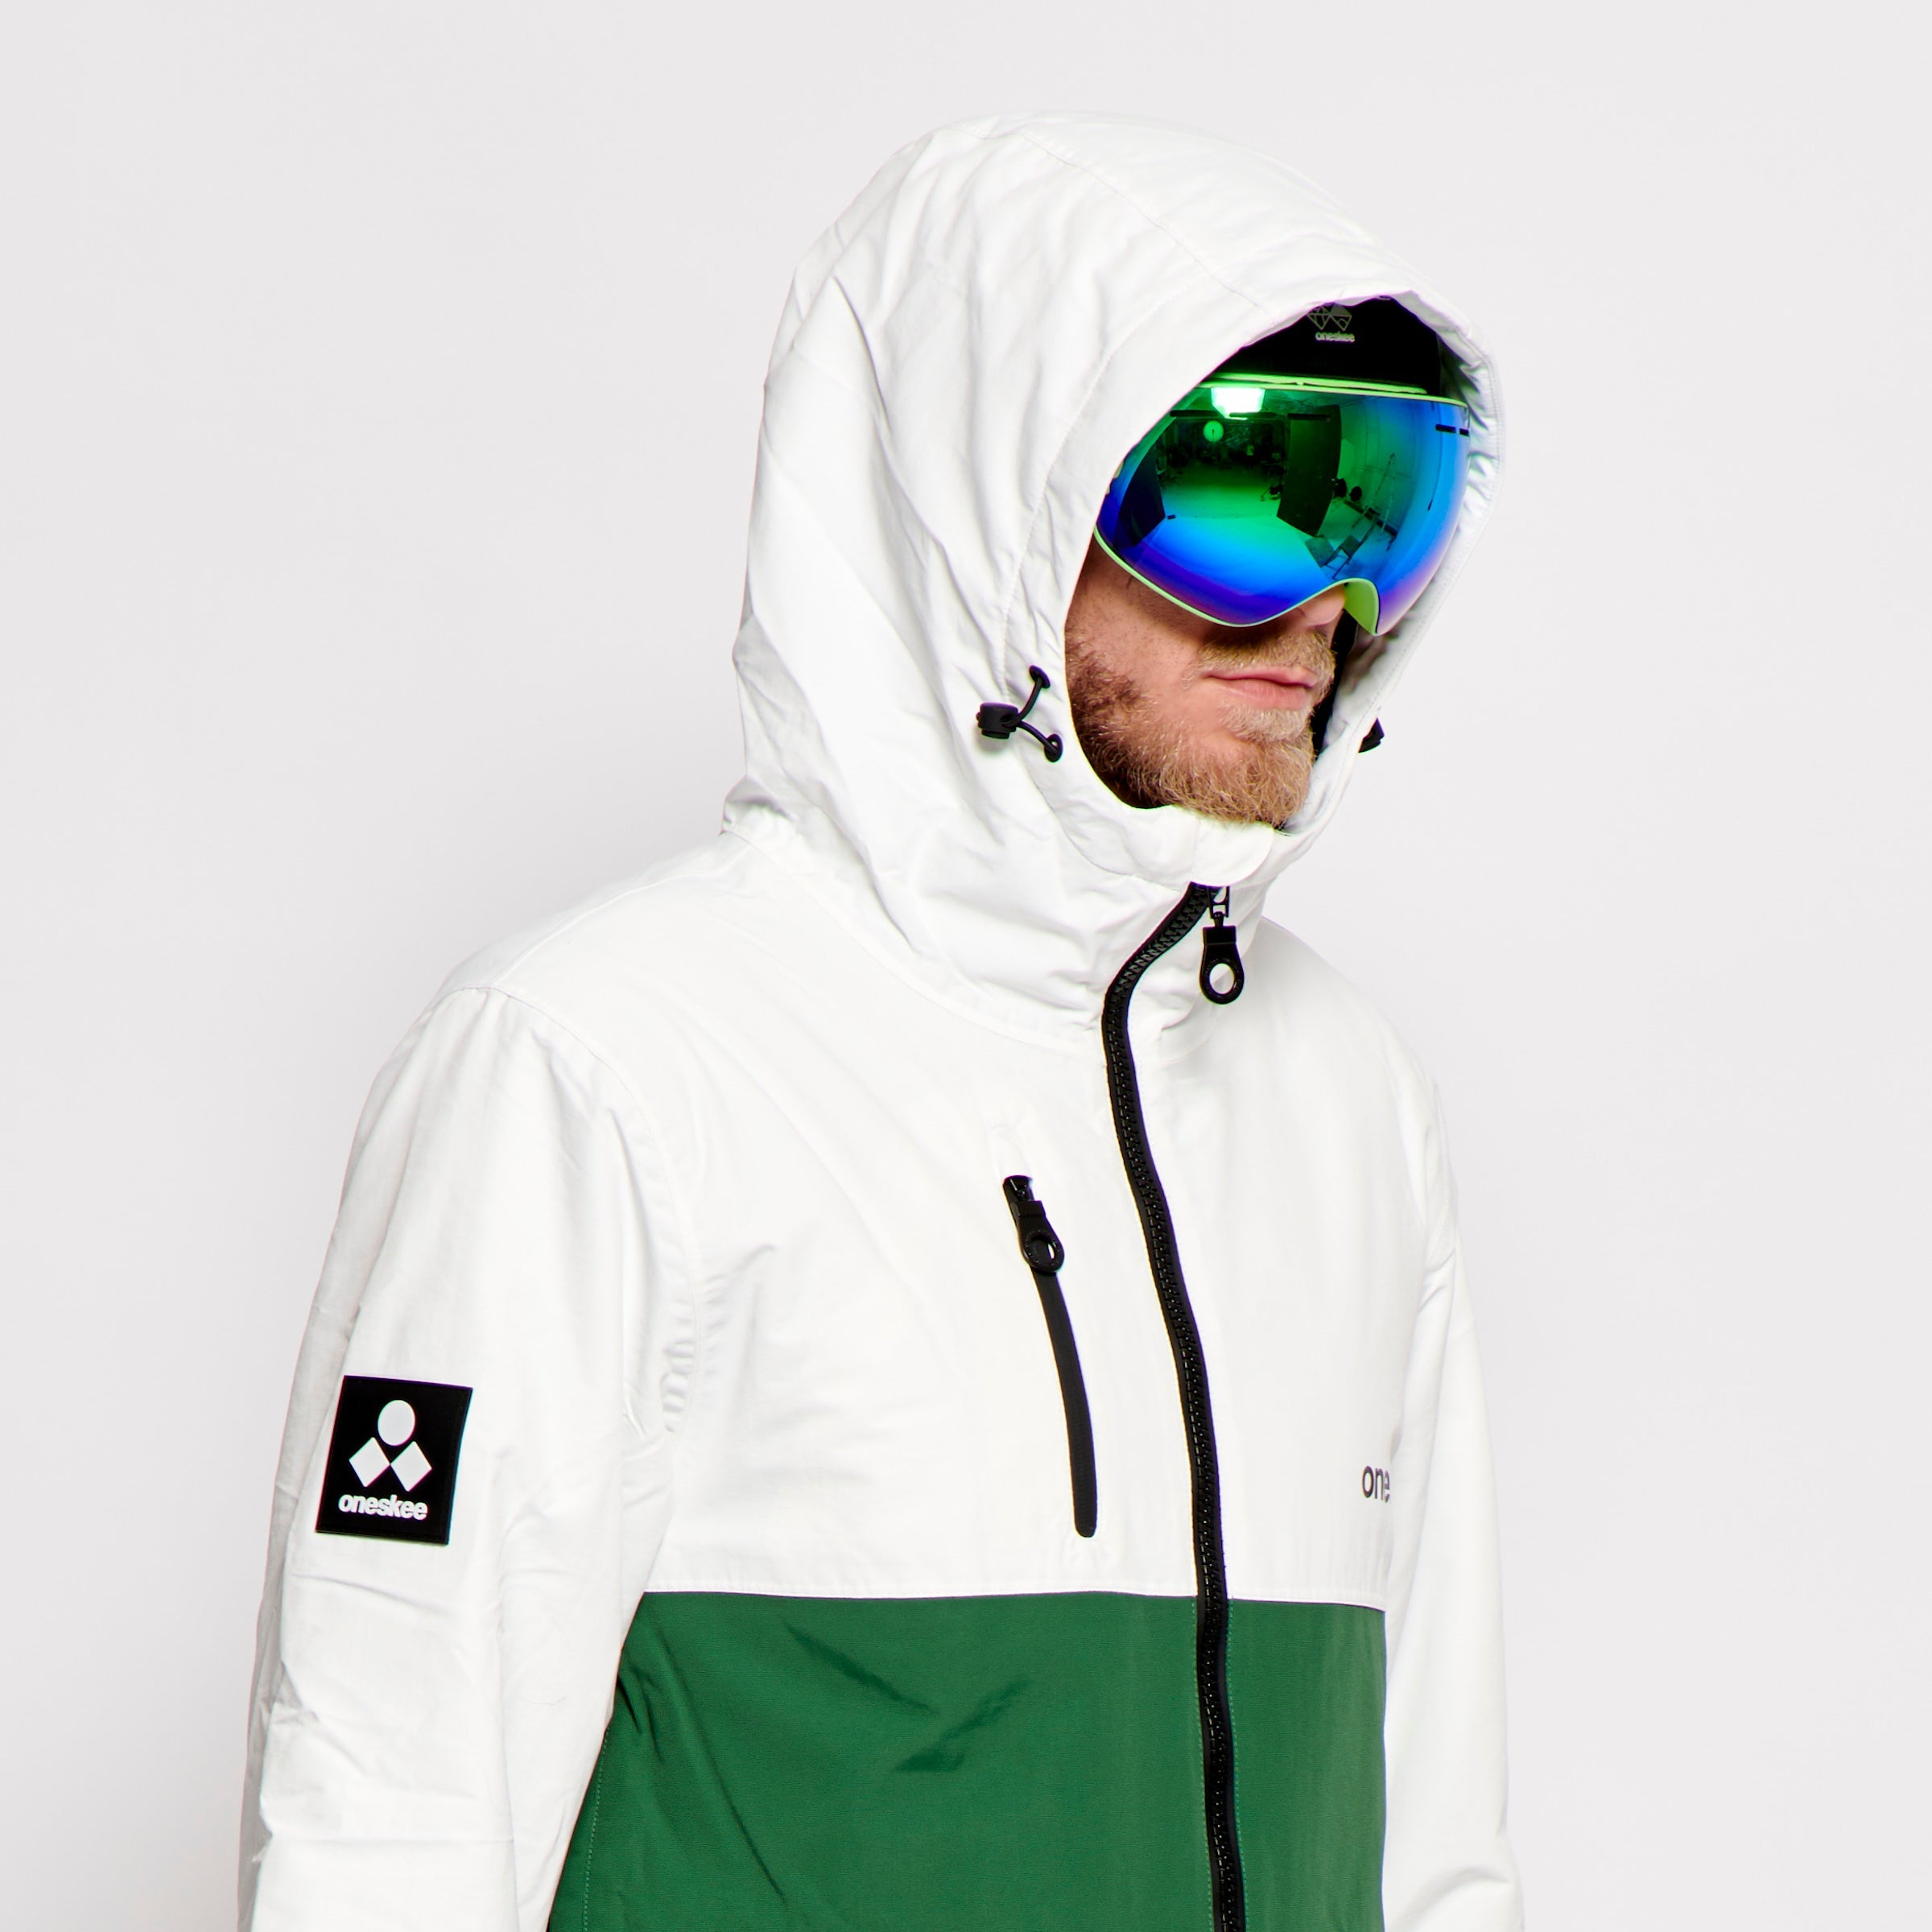 Men's Snow Suit, Green & White